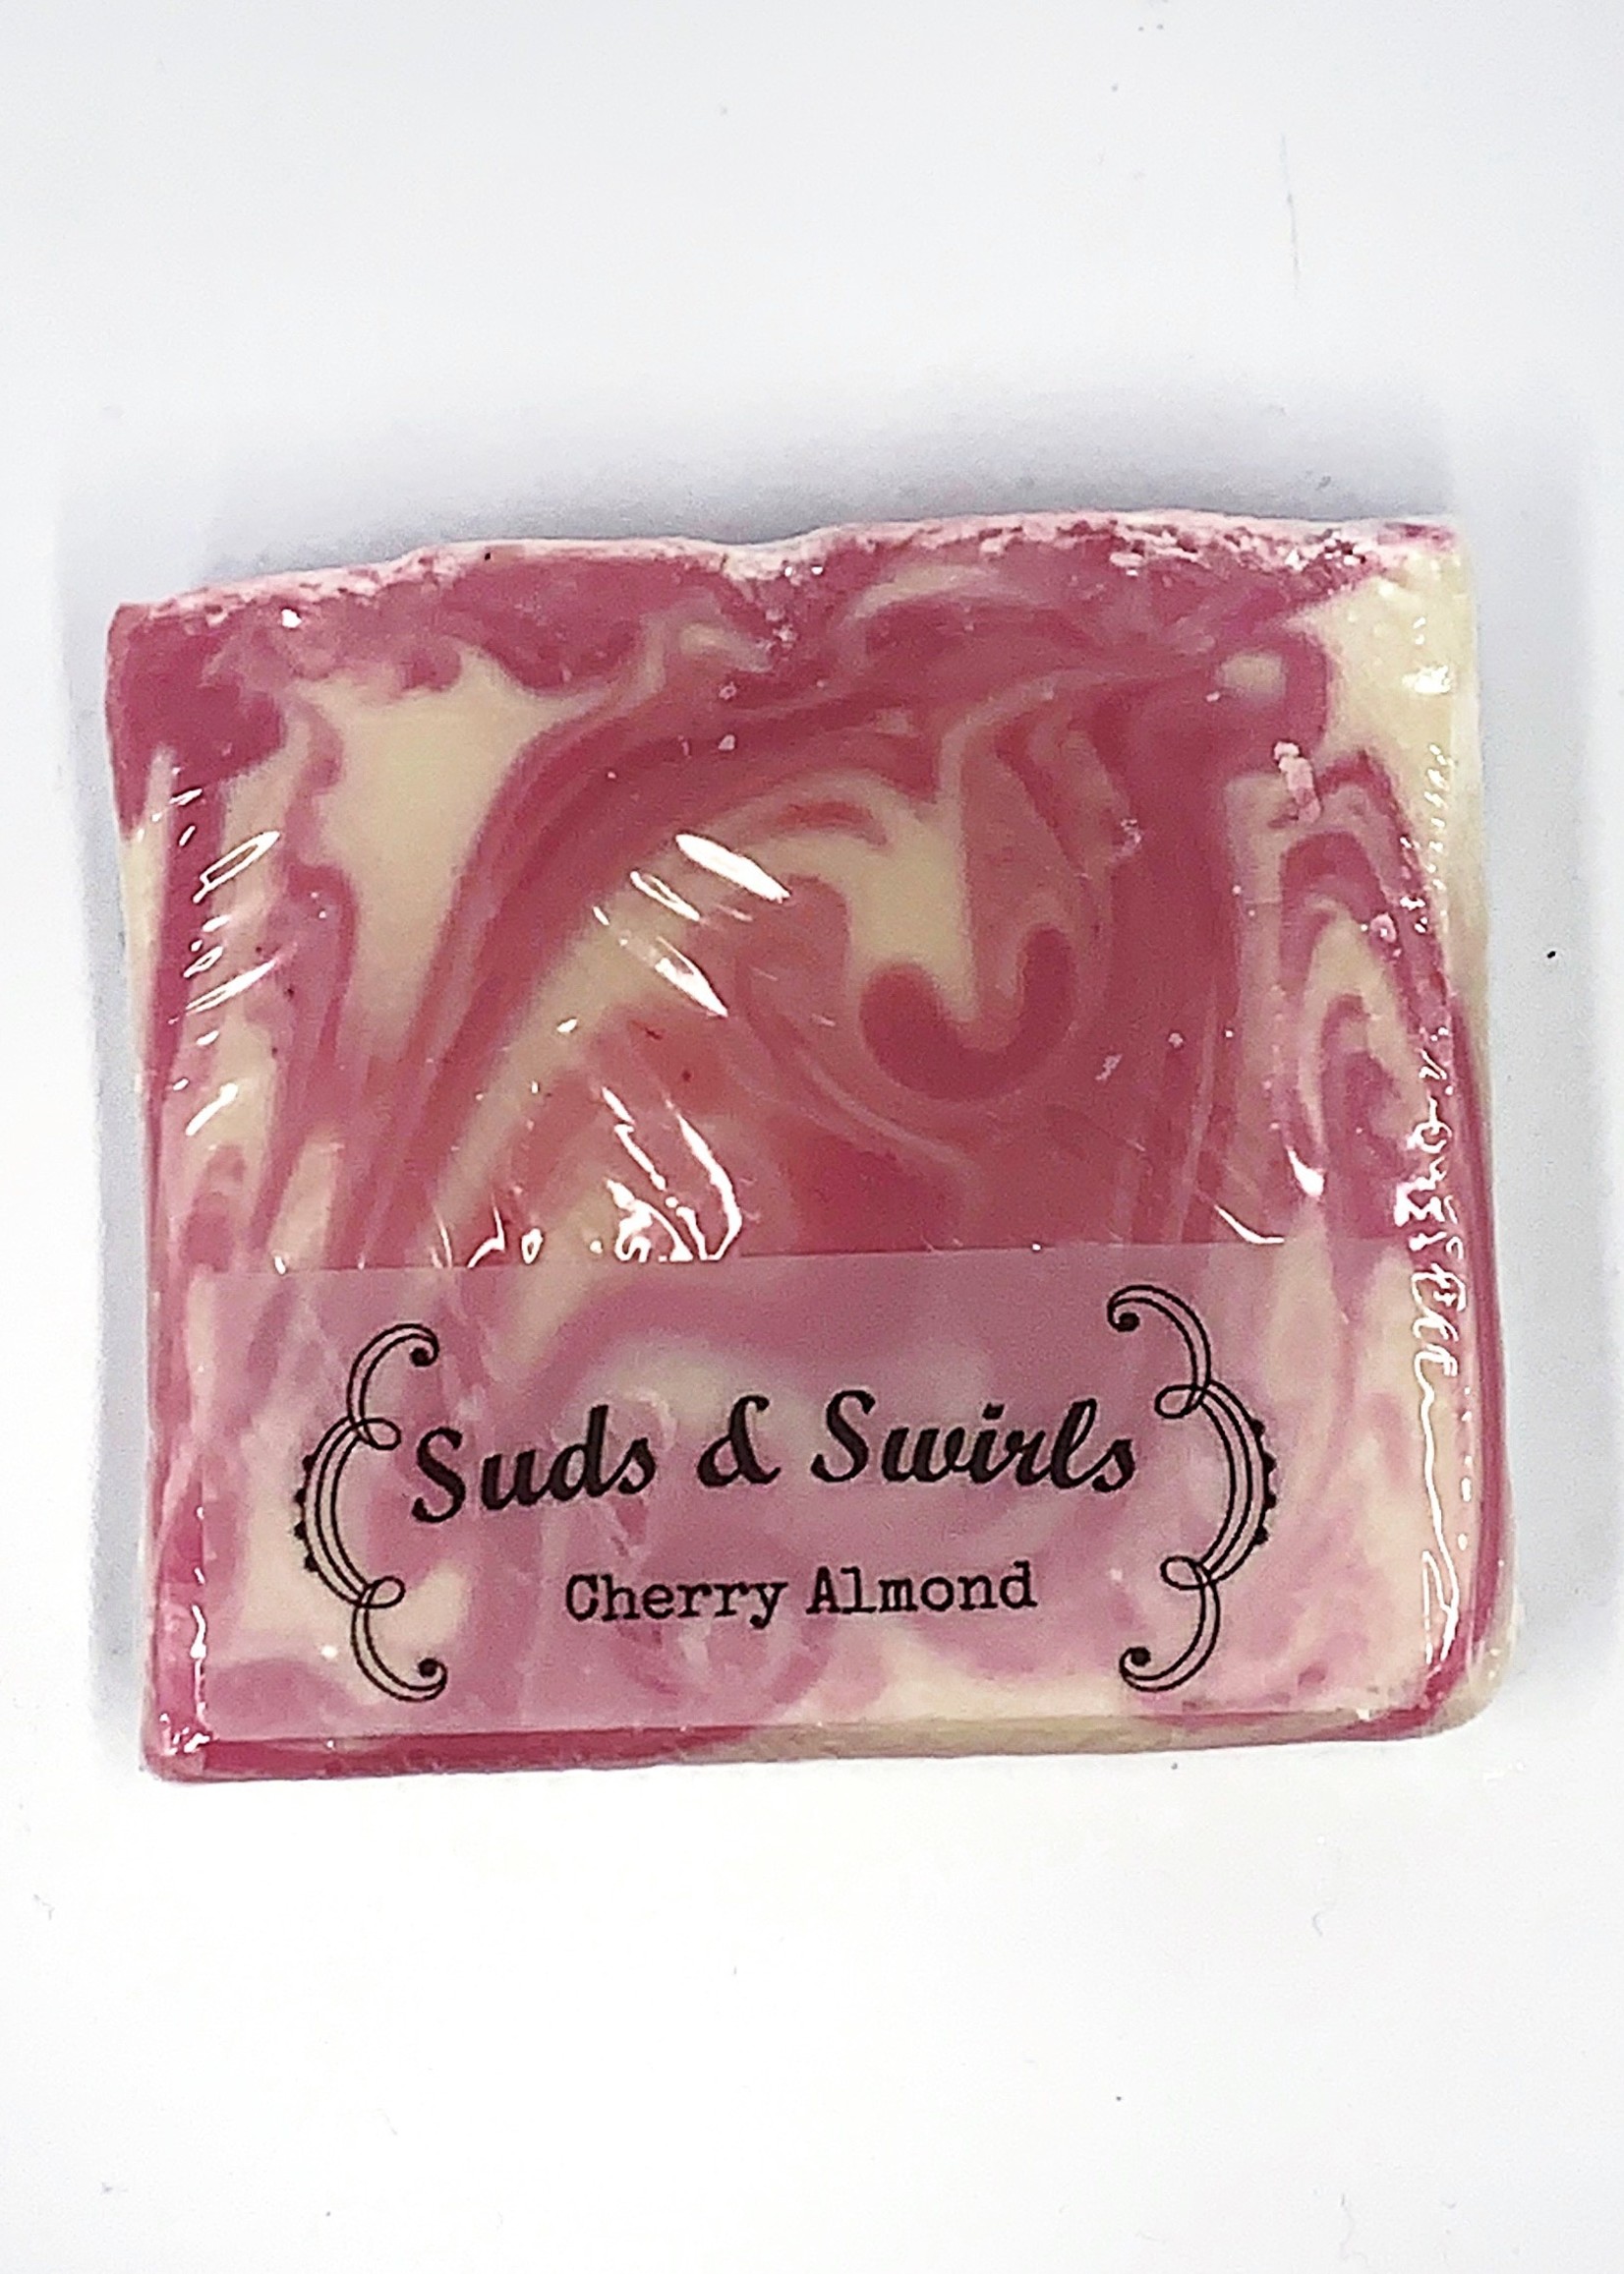 Suds & Swirls Cherry Almond